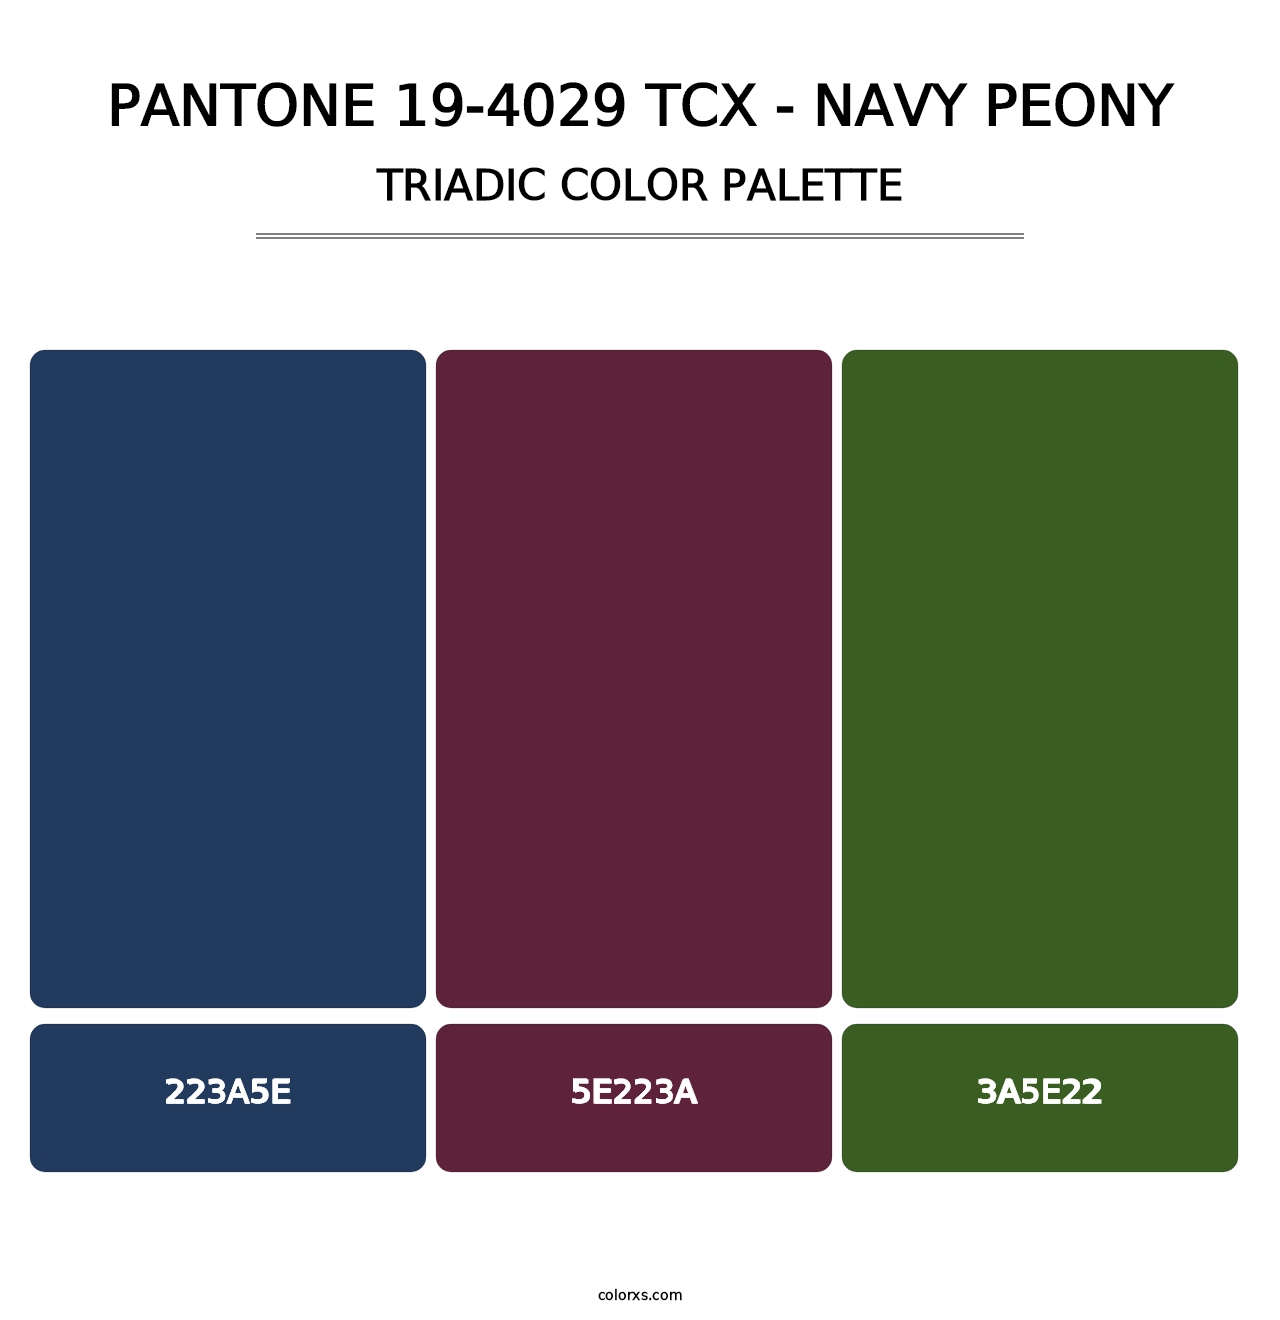 PANTONE 19-4029 TCX - Navy Peony - Triadic Color Palette